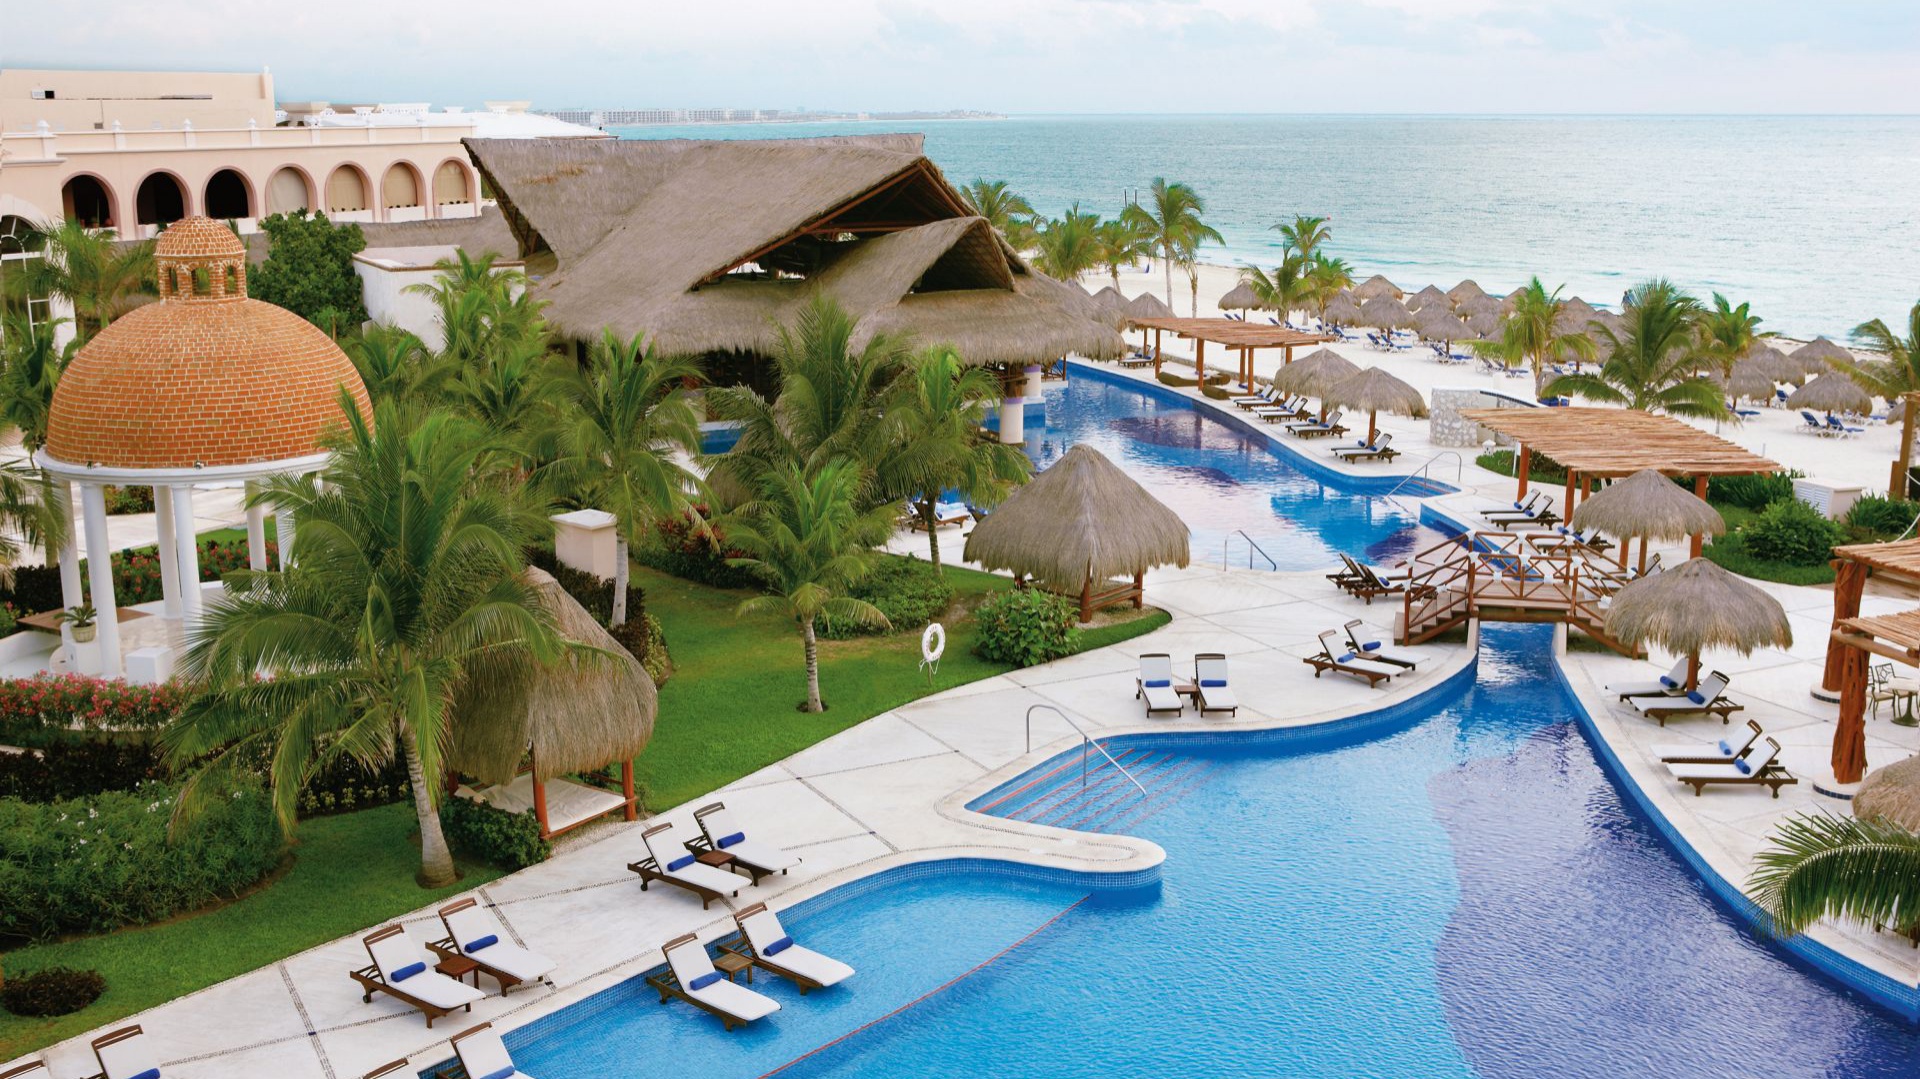 Excellence Riviera Cancun. Meksyk. Fot. Hotels.com